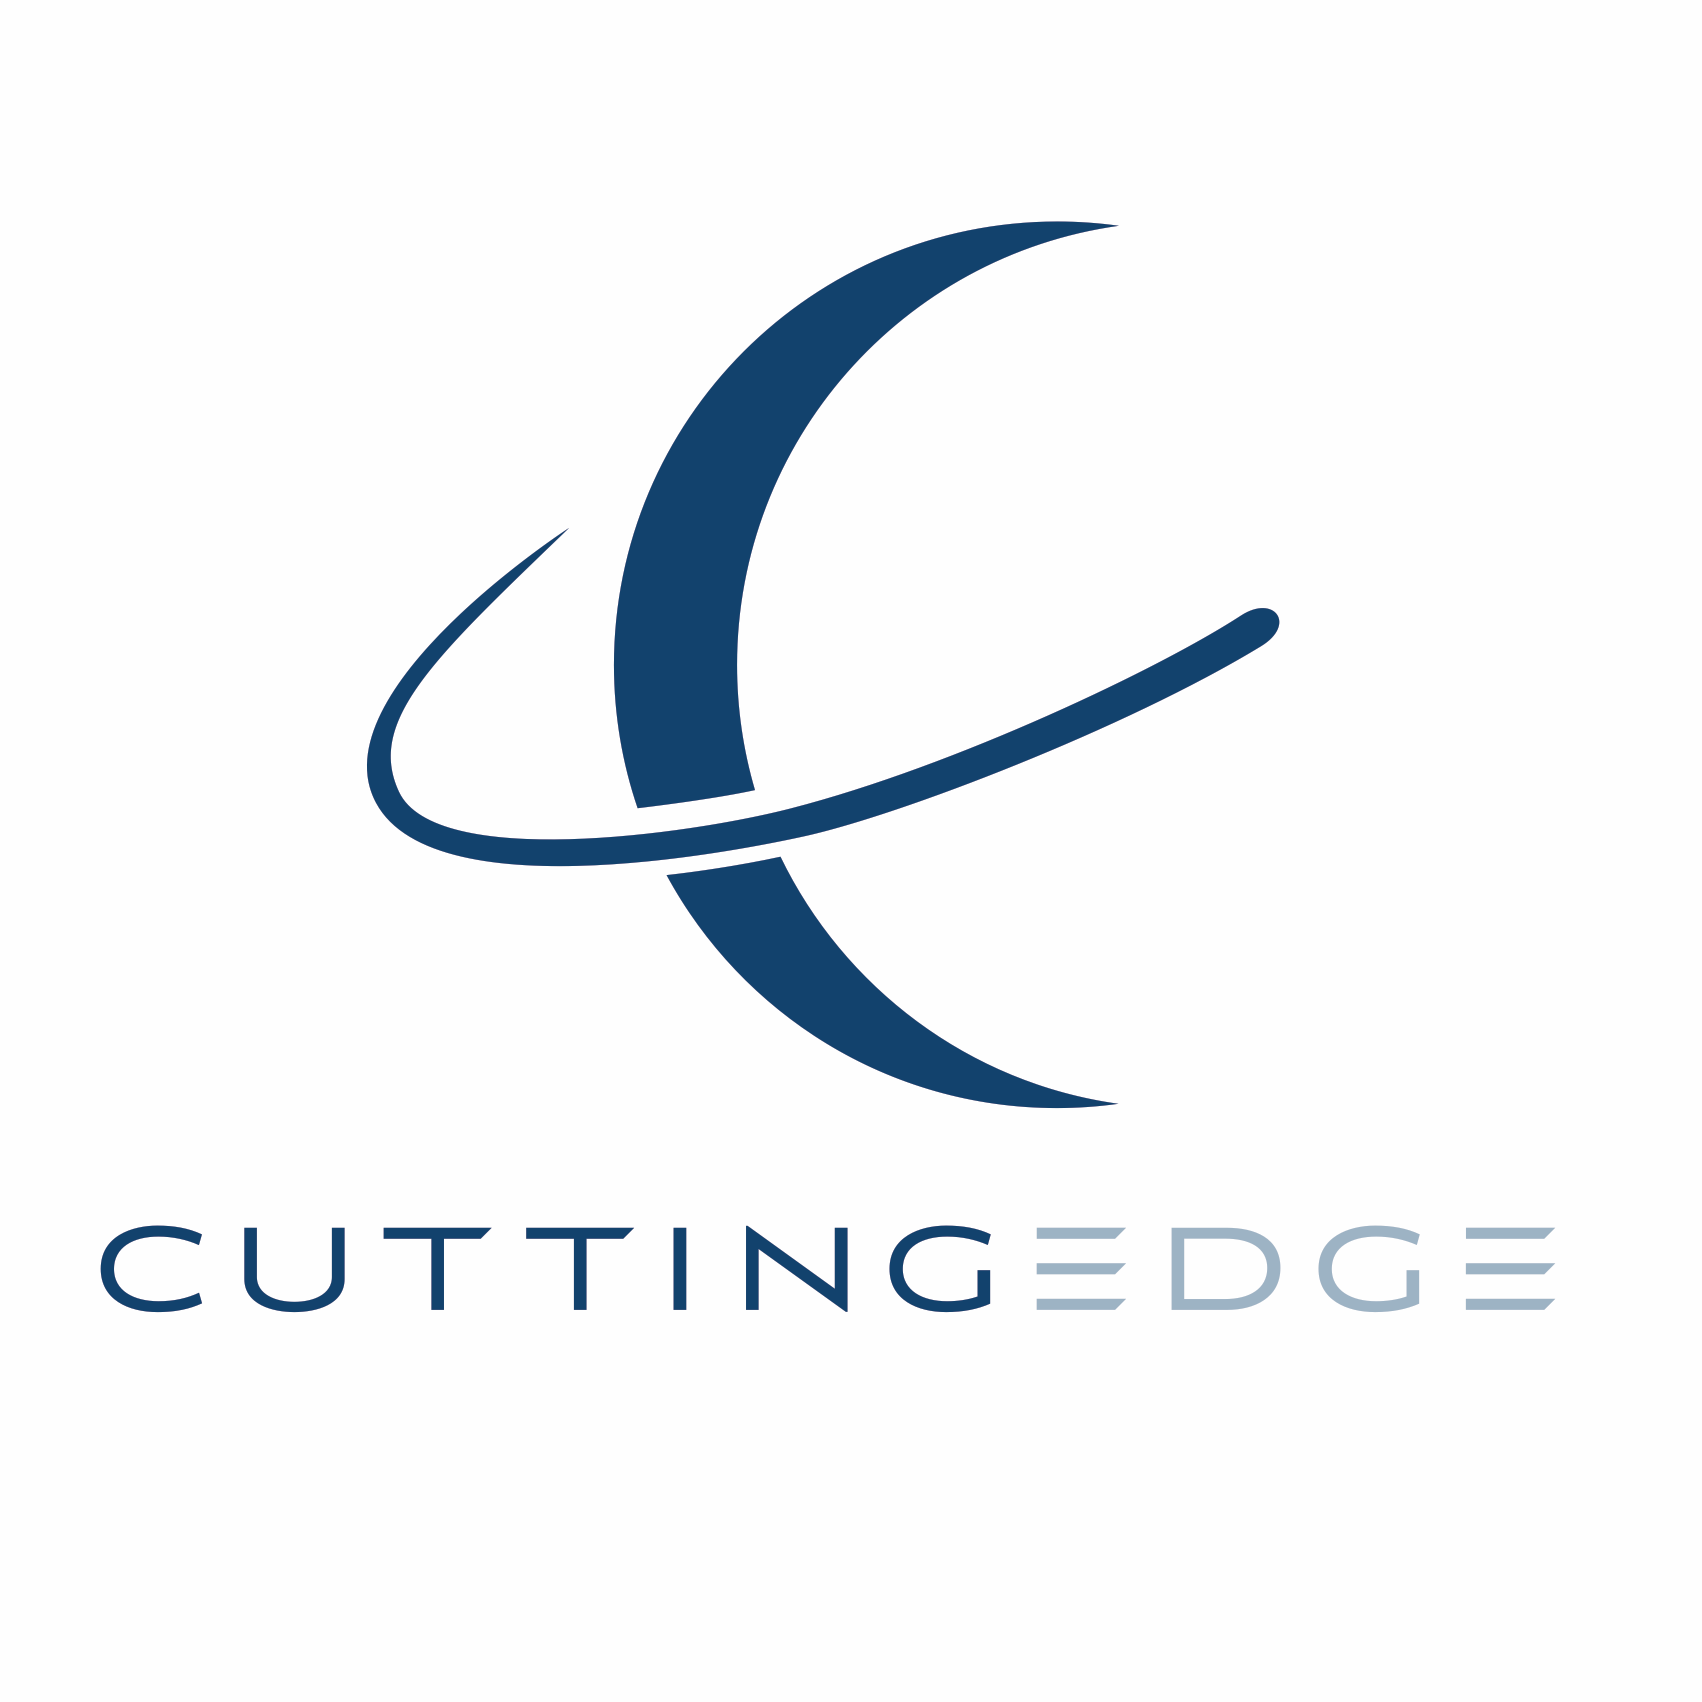 Cutting edge logo